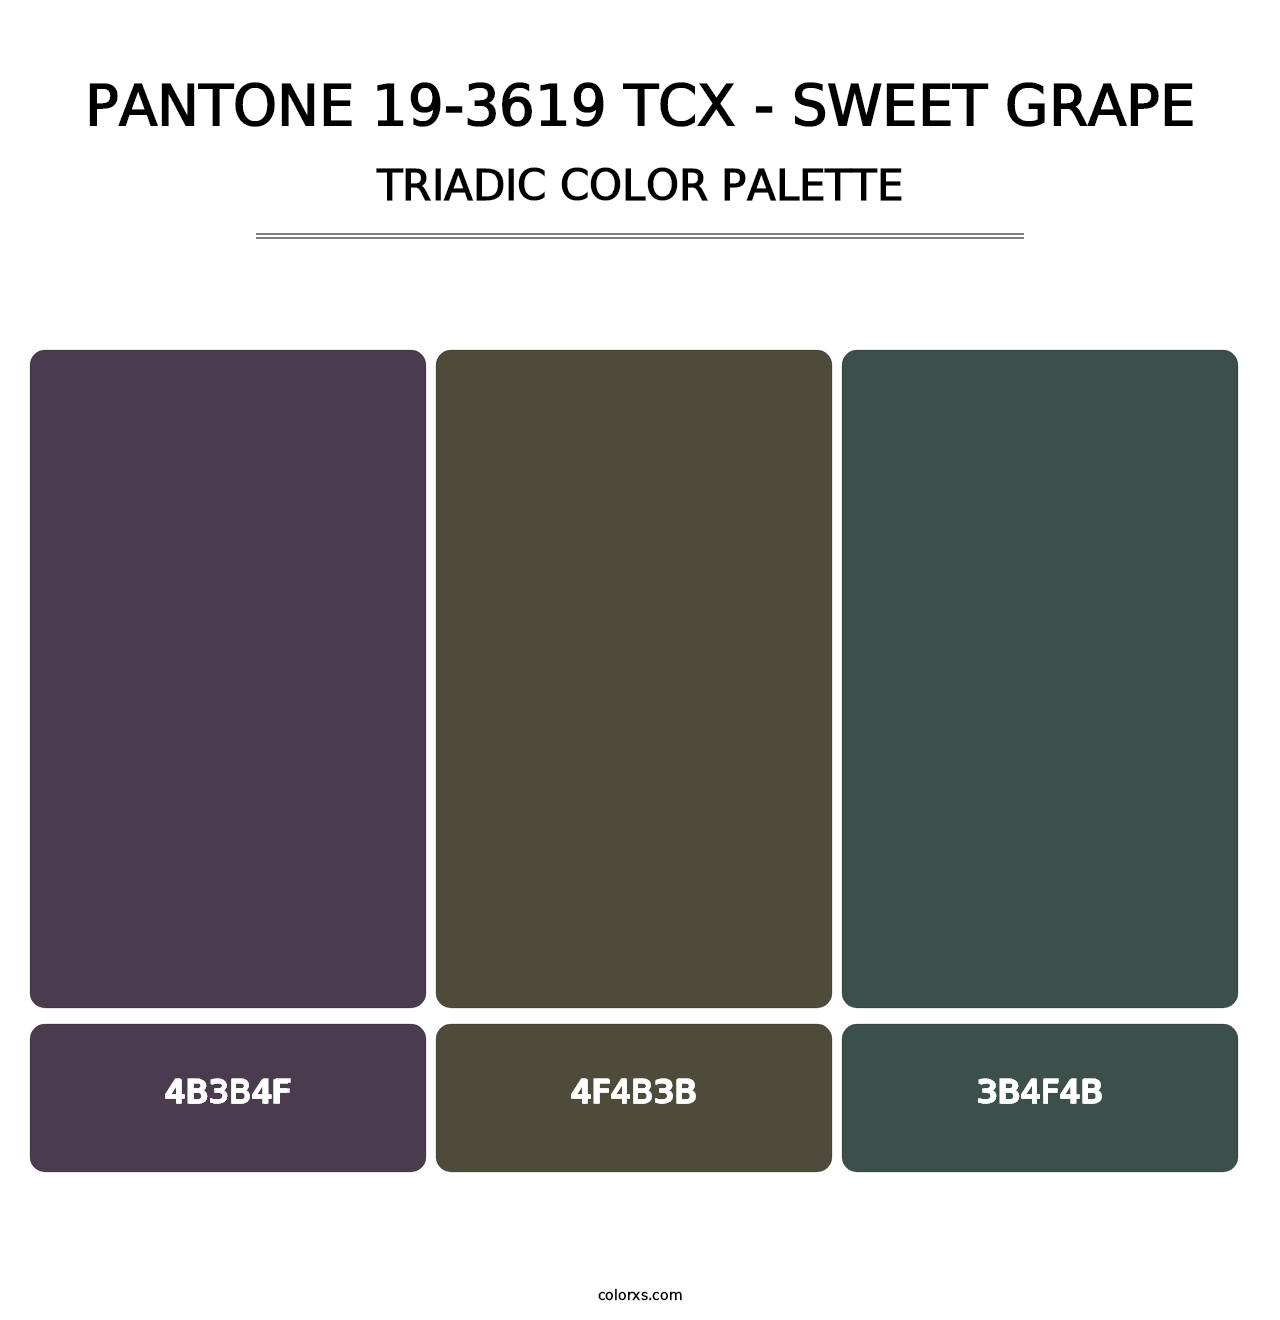 PANTONE 19-3619 TCX - Sweet Grape - Triadic Color Palette